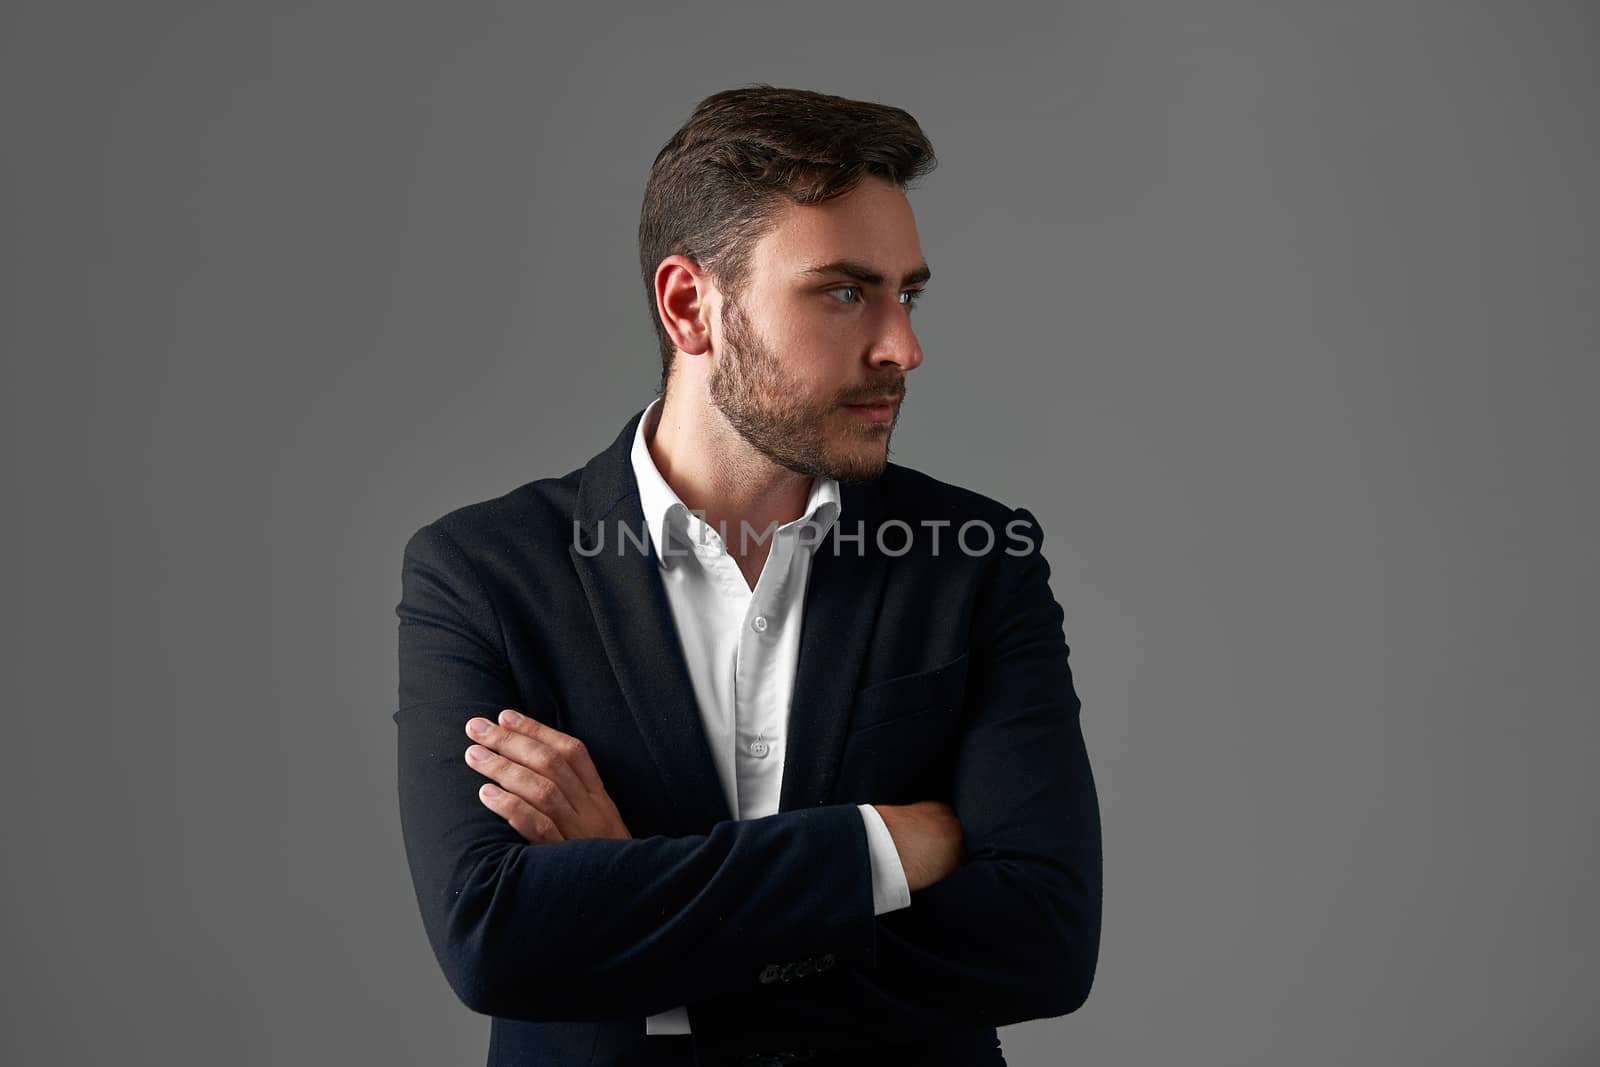 Businessman Business person. Man business suit studio gray background. Modern caucasian person arms crossed Portrait attractive successful millenial guy entrepreneur